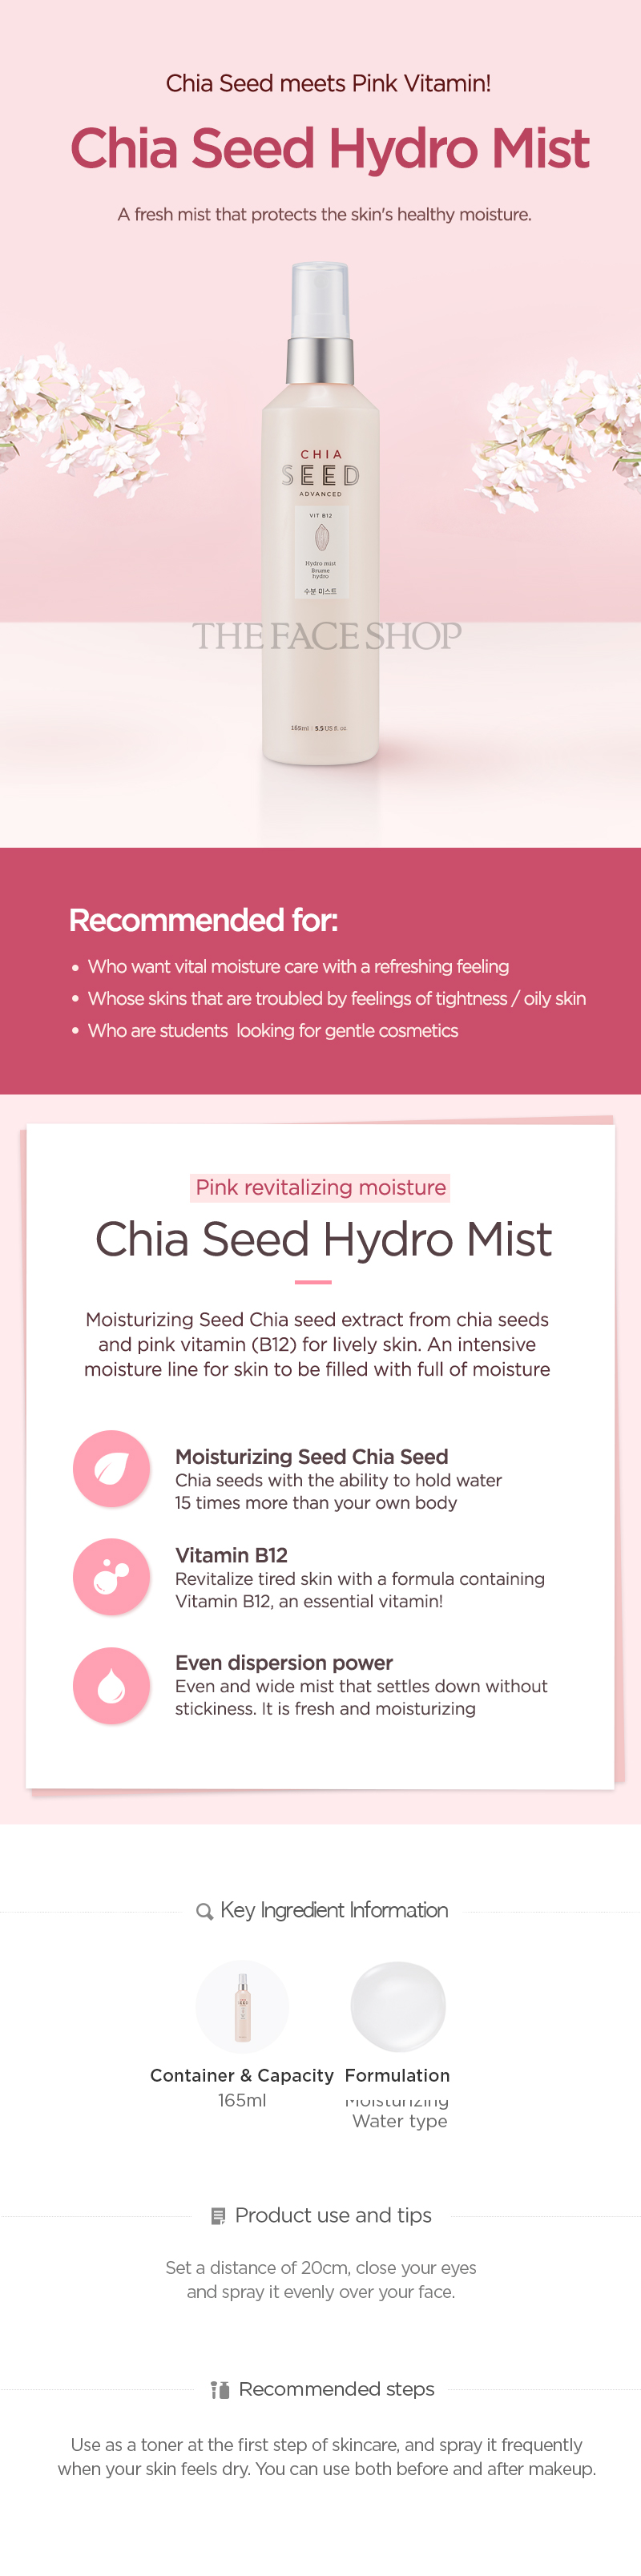 Chia Seed Hydrating Mist